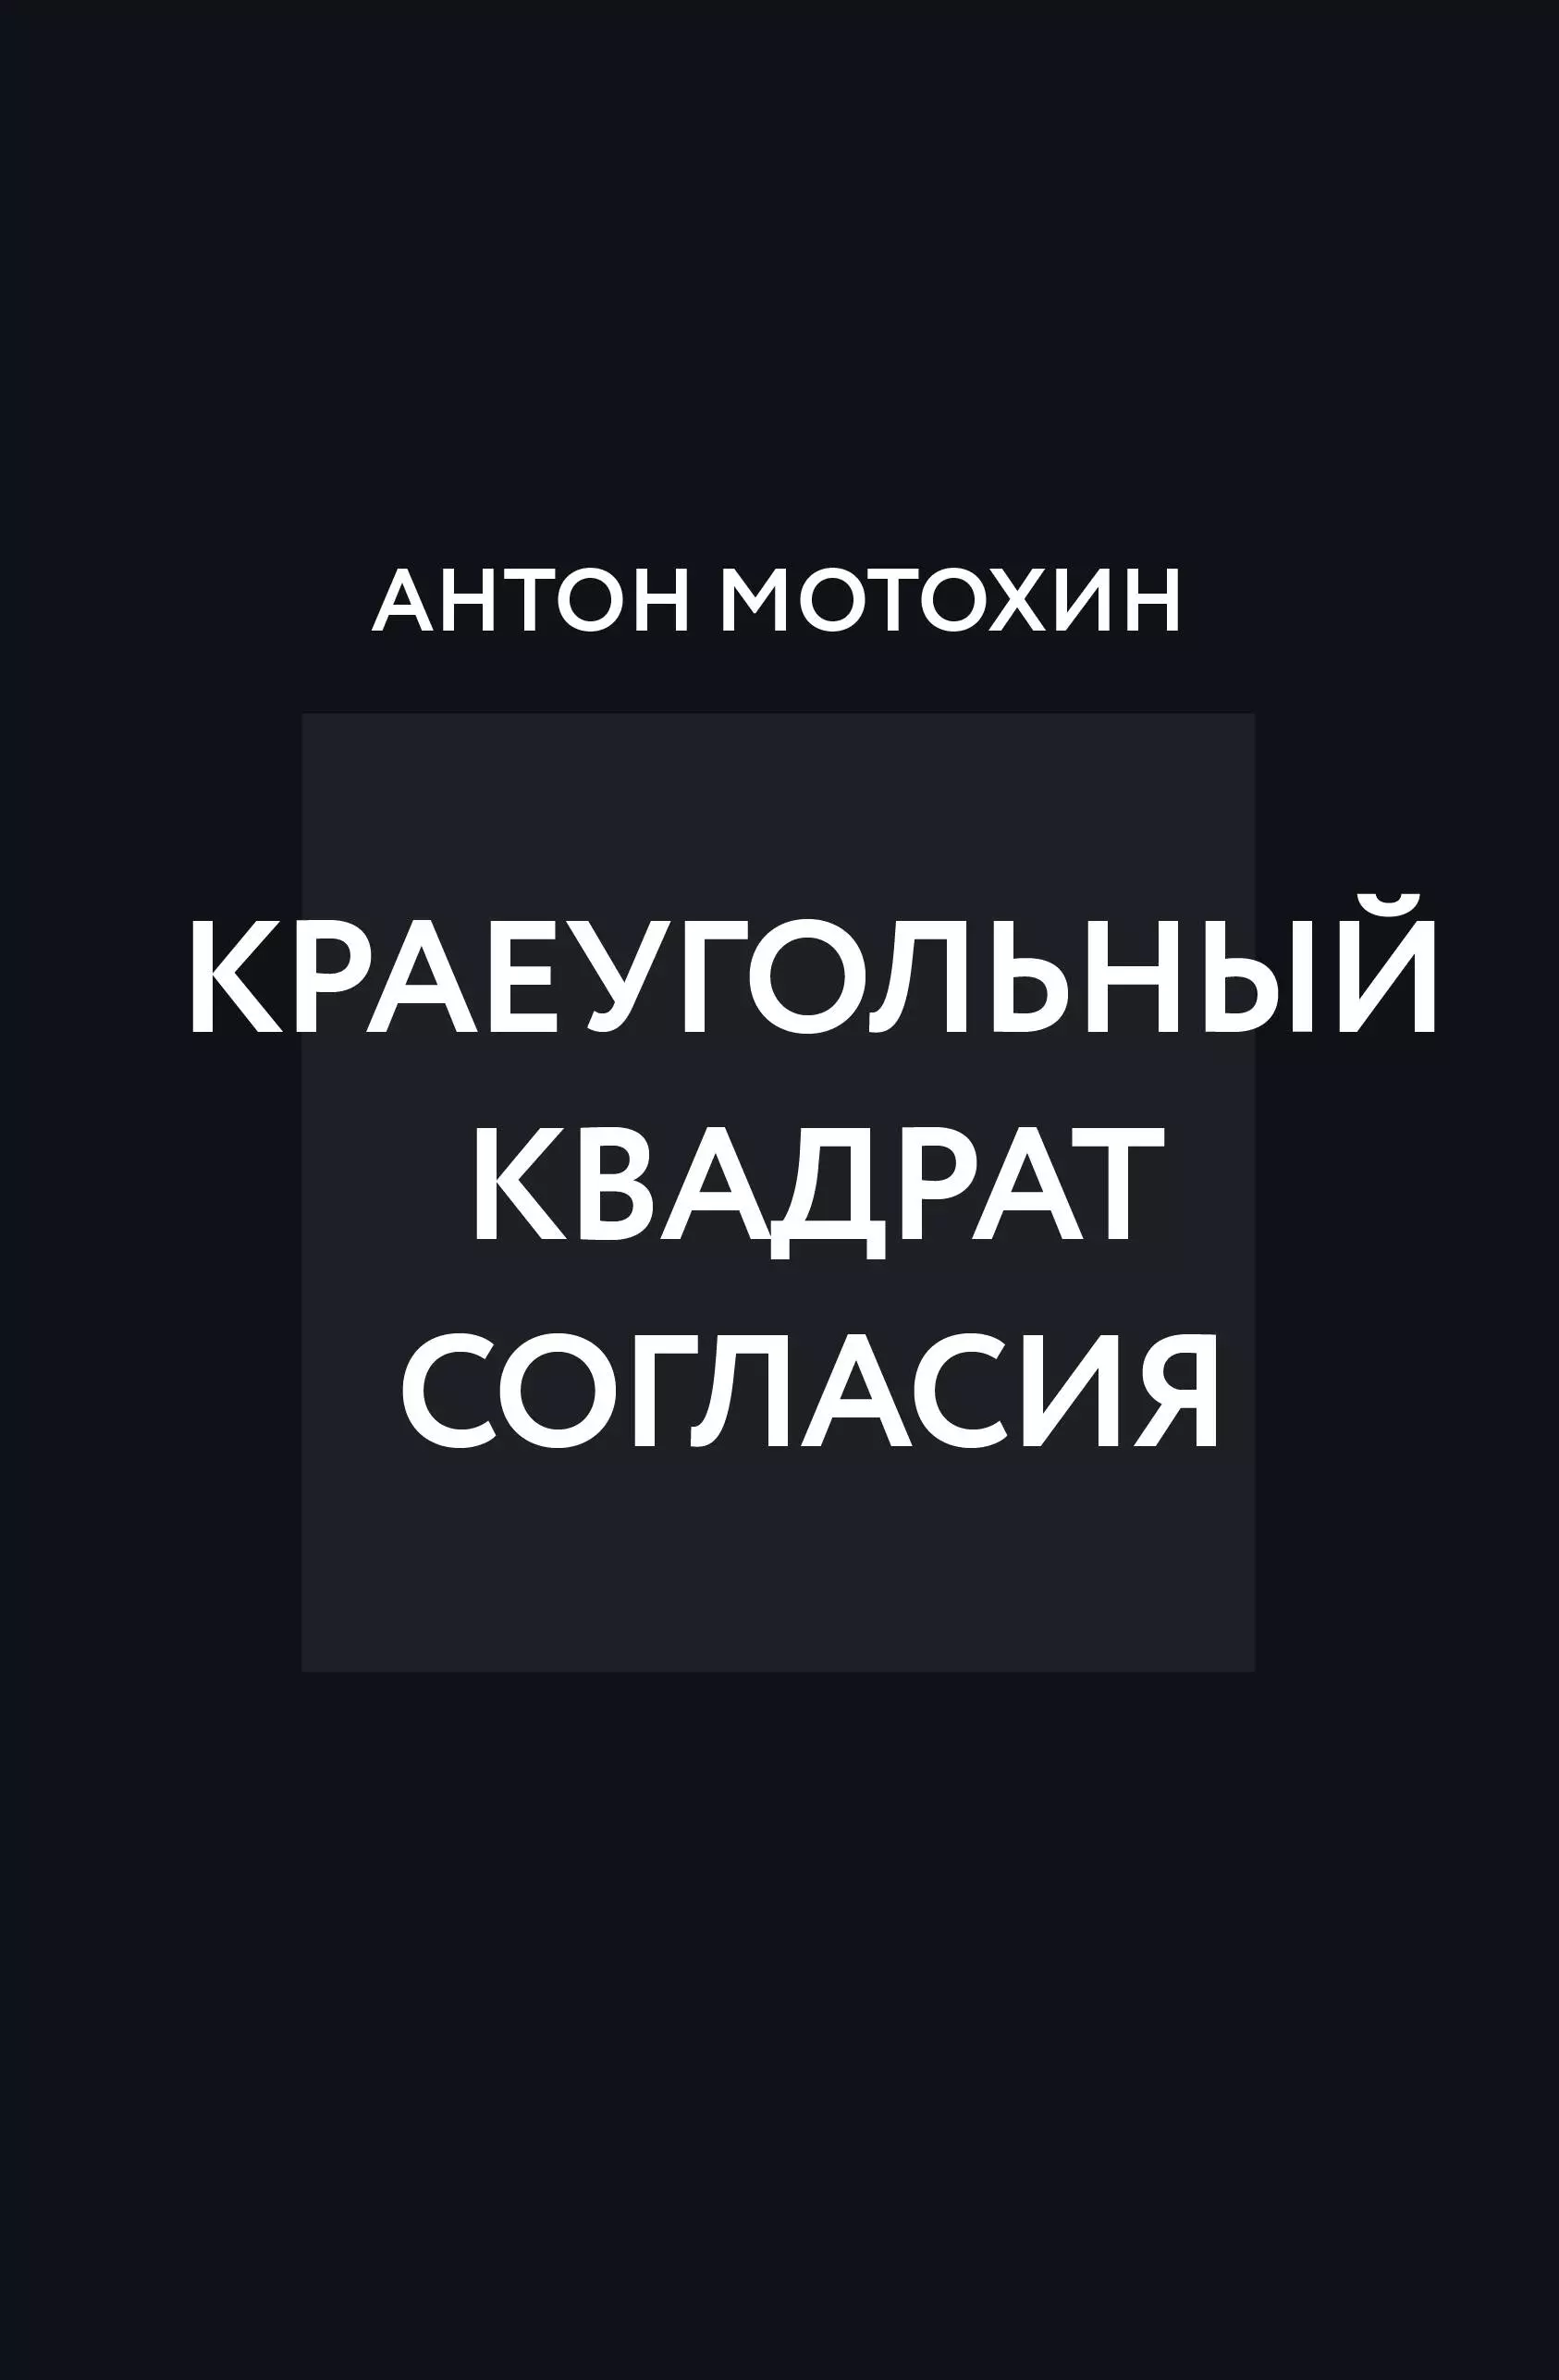 Мотохин Антон Михайлович - Краеугольный квадрат согласия